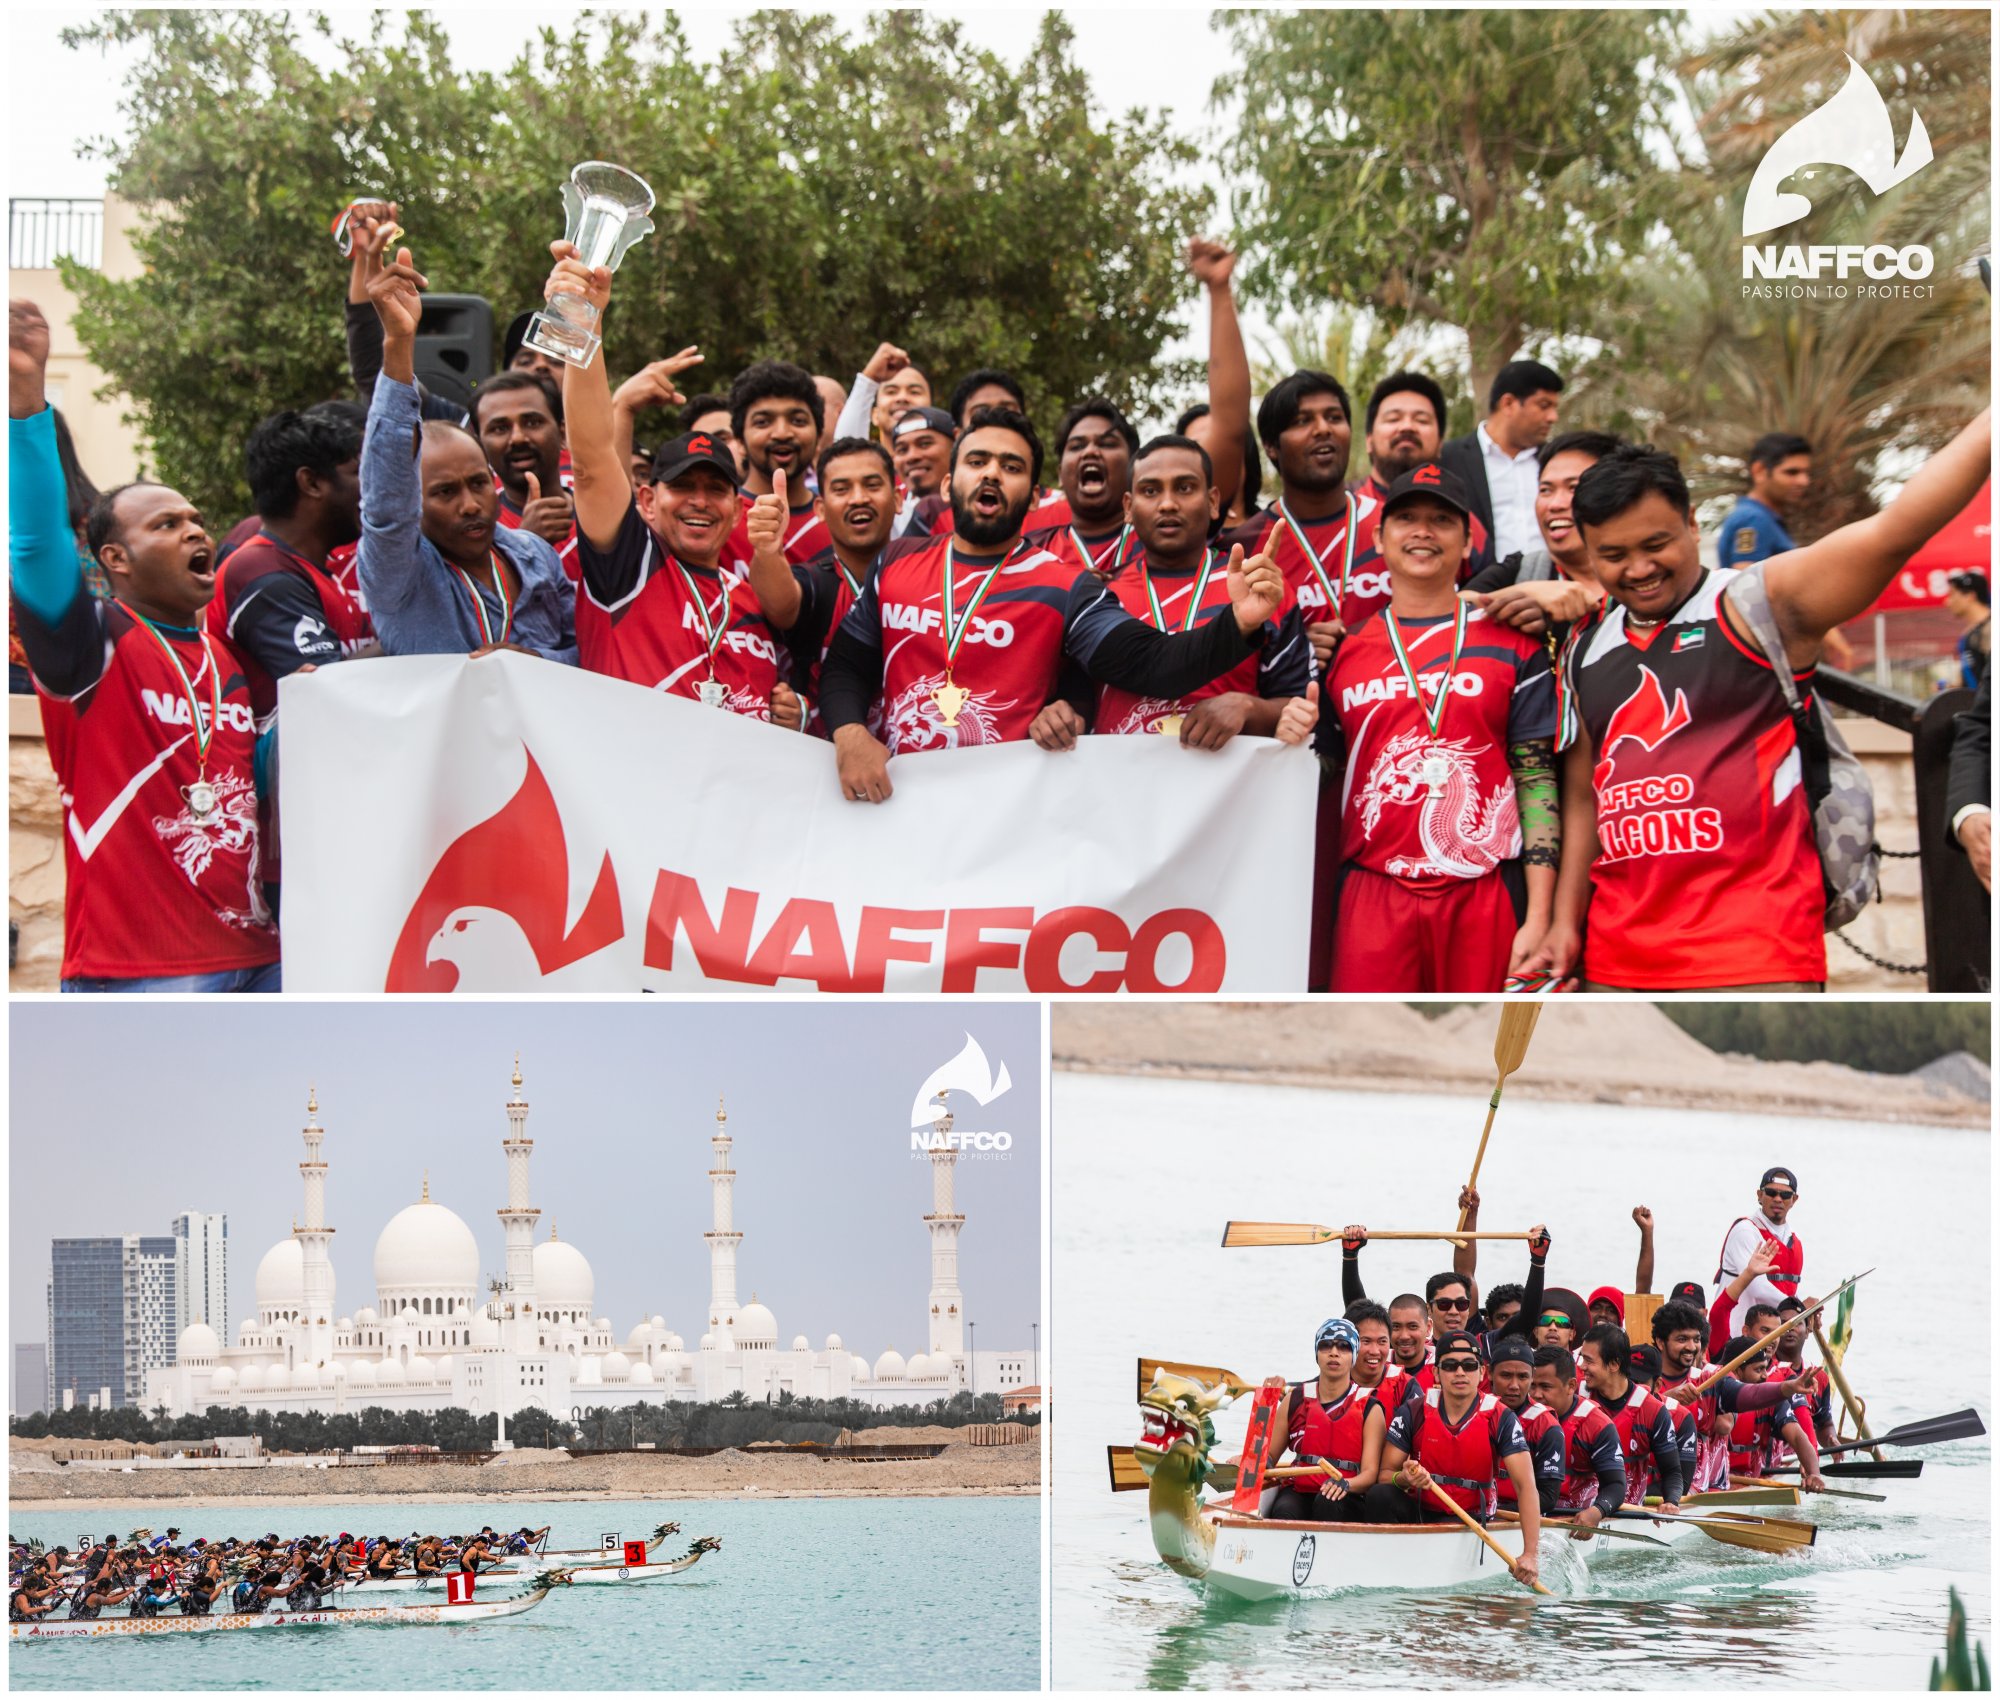 NAFFCO  Dragon Boat Team Won Championship at Abu Dhabi Dragon Boat Festival 2019 held at Abu Dhabi.